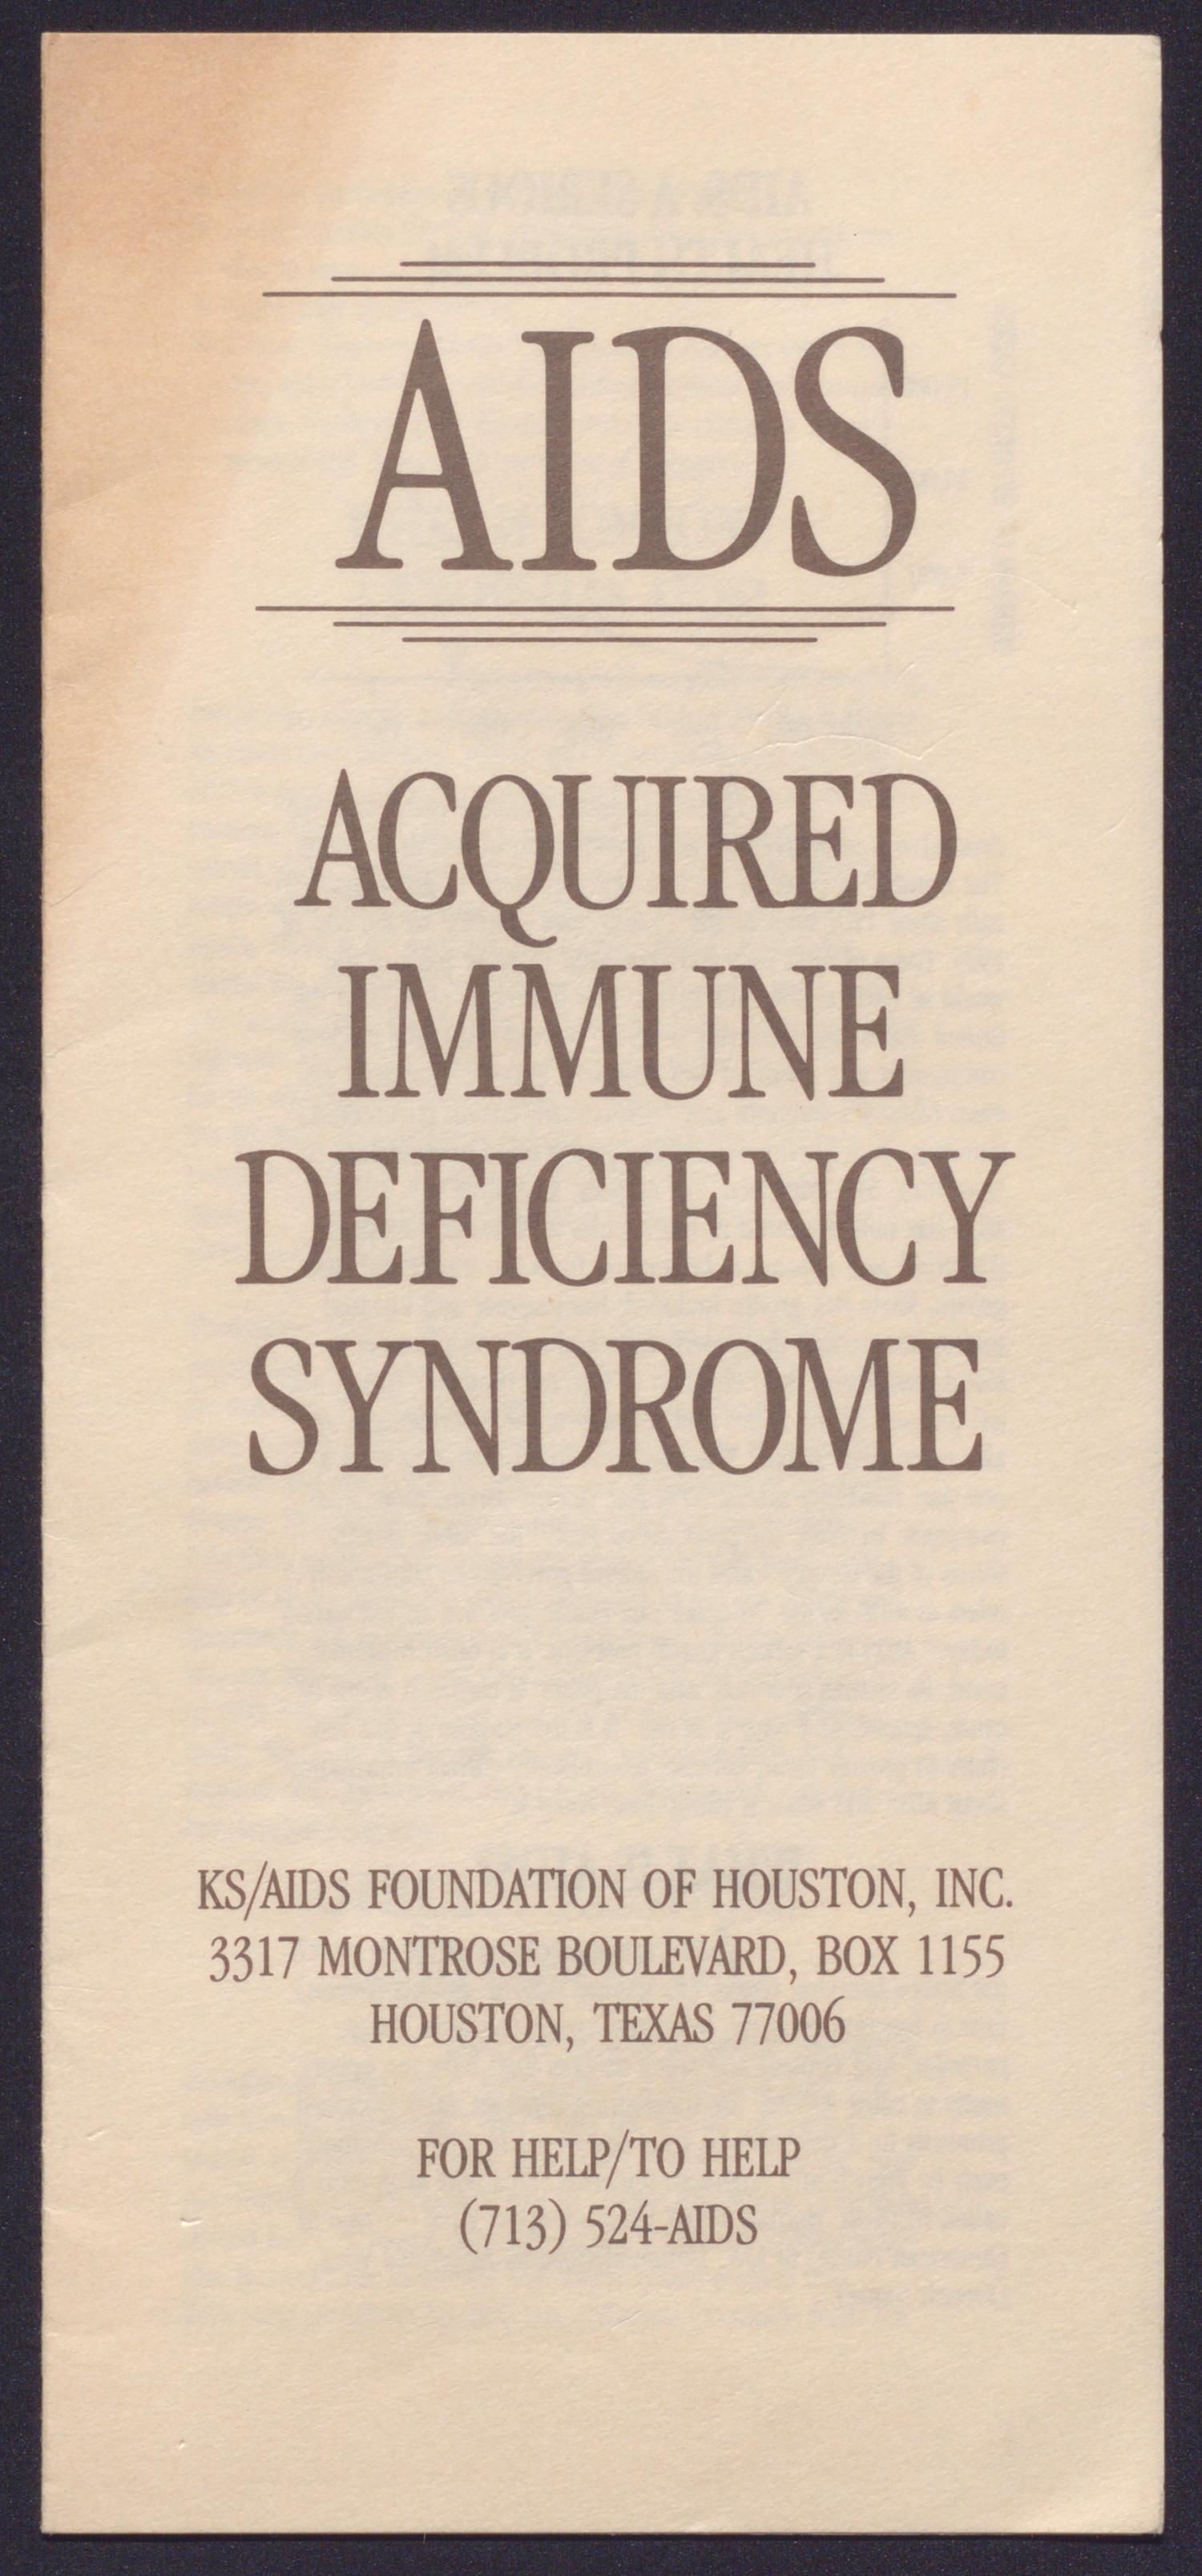 is autoimmune deficiency aids